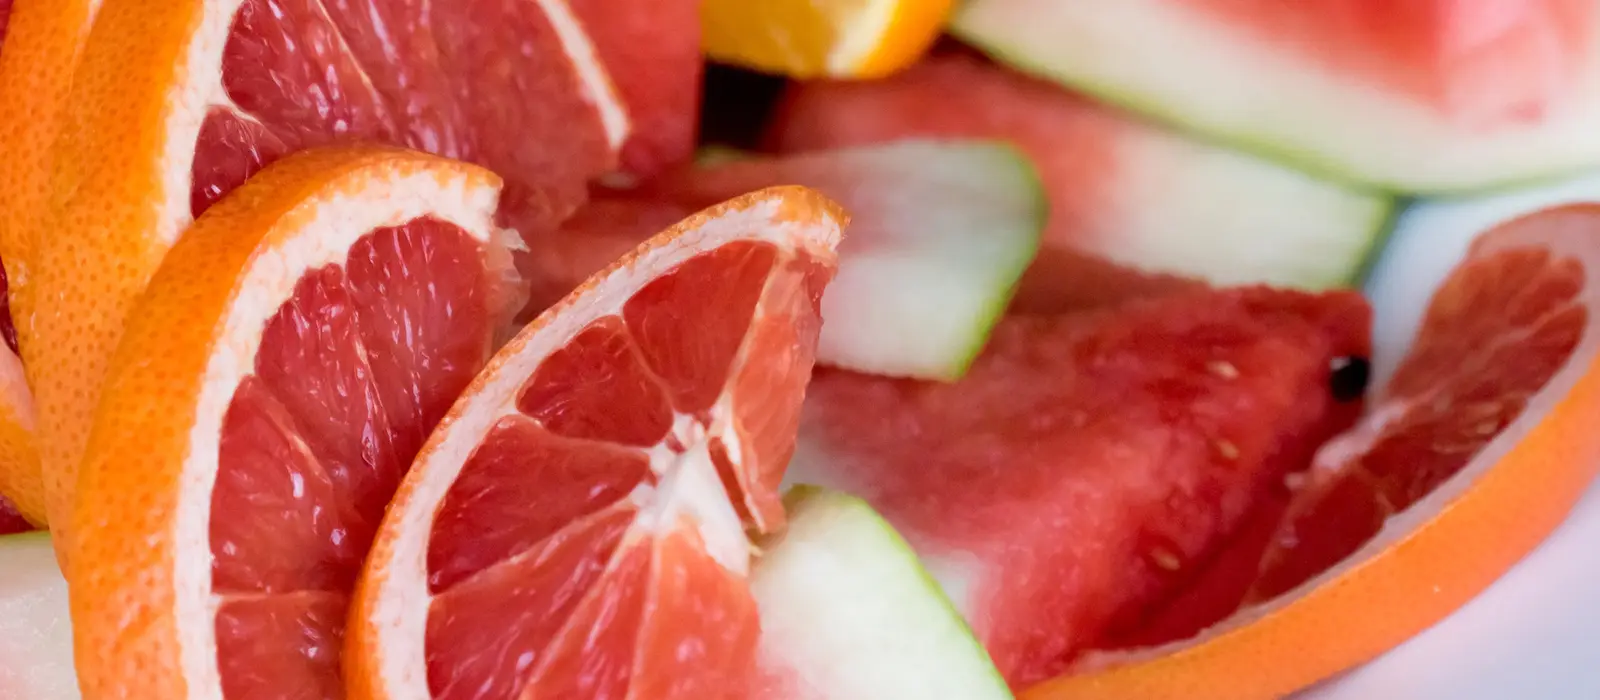 Sliced watermelon, grapefruit and orange